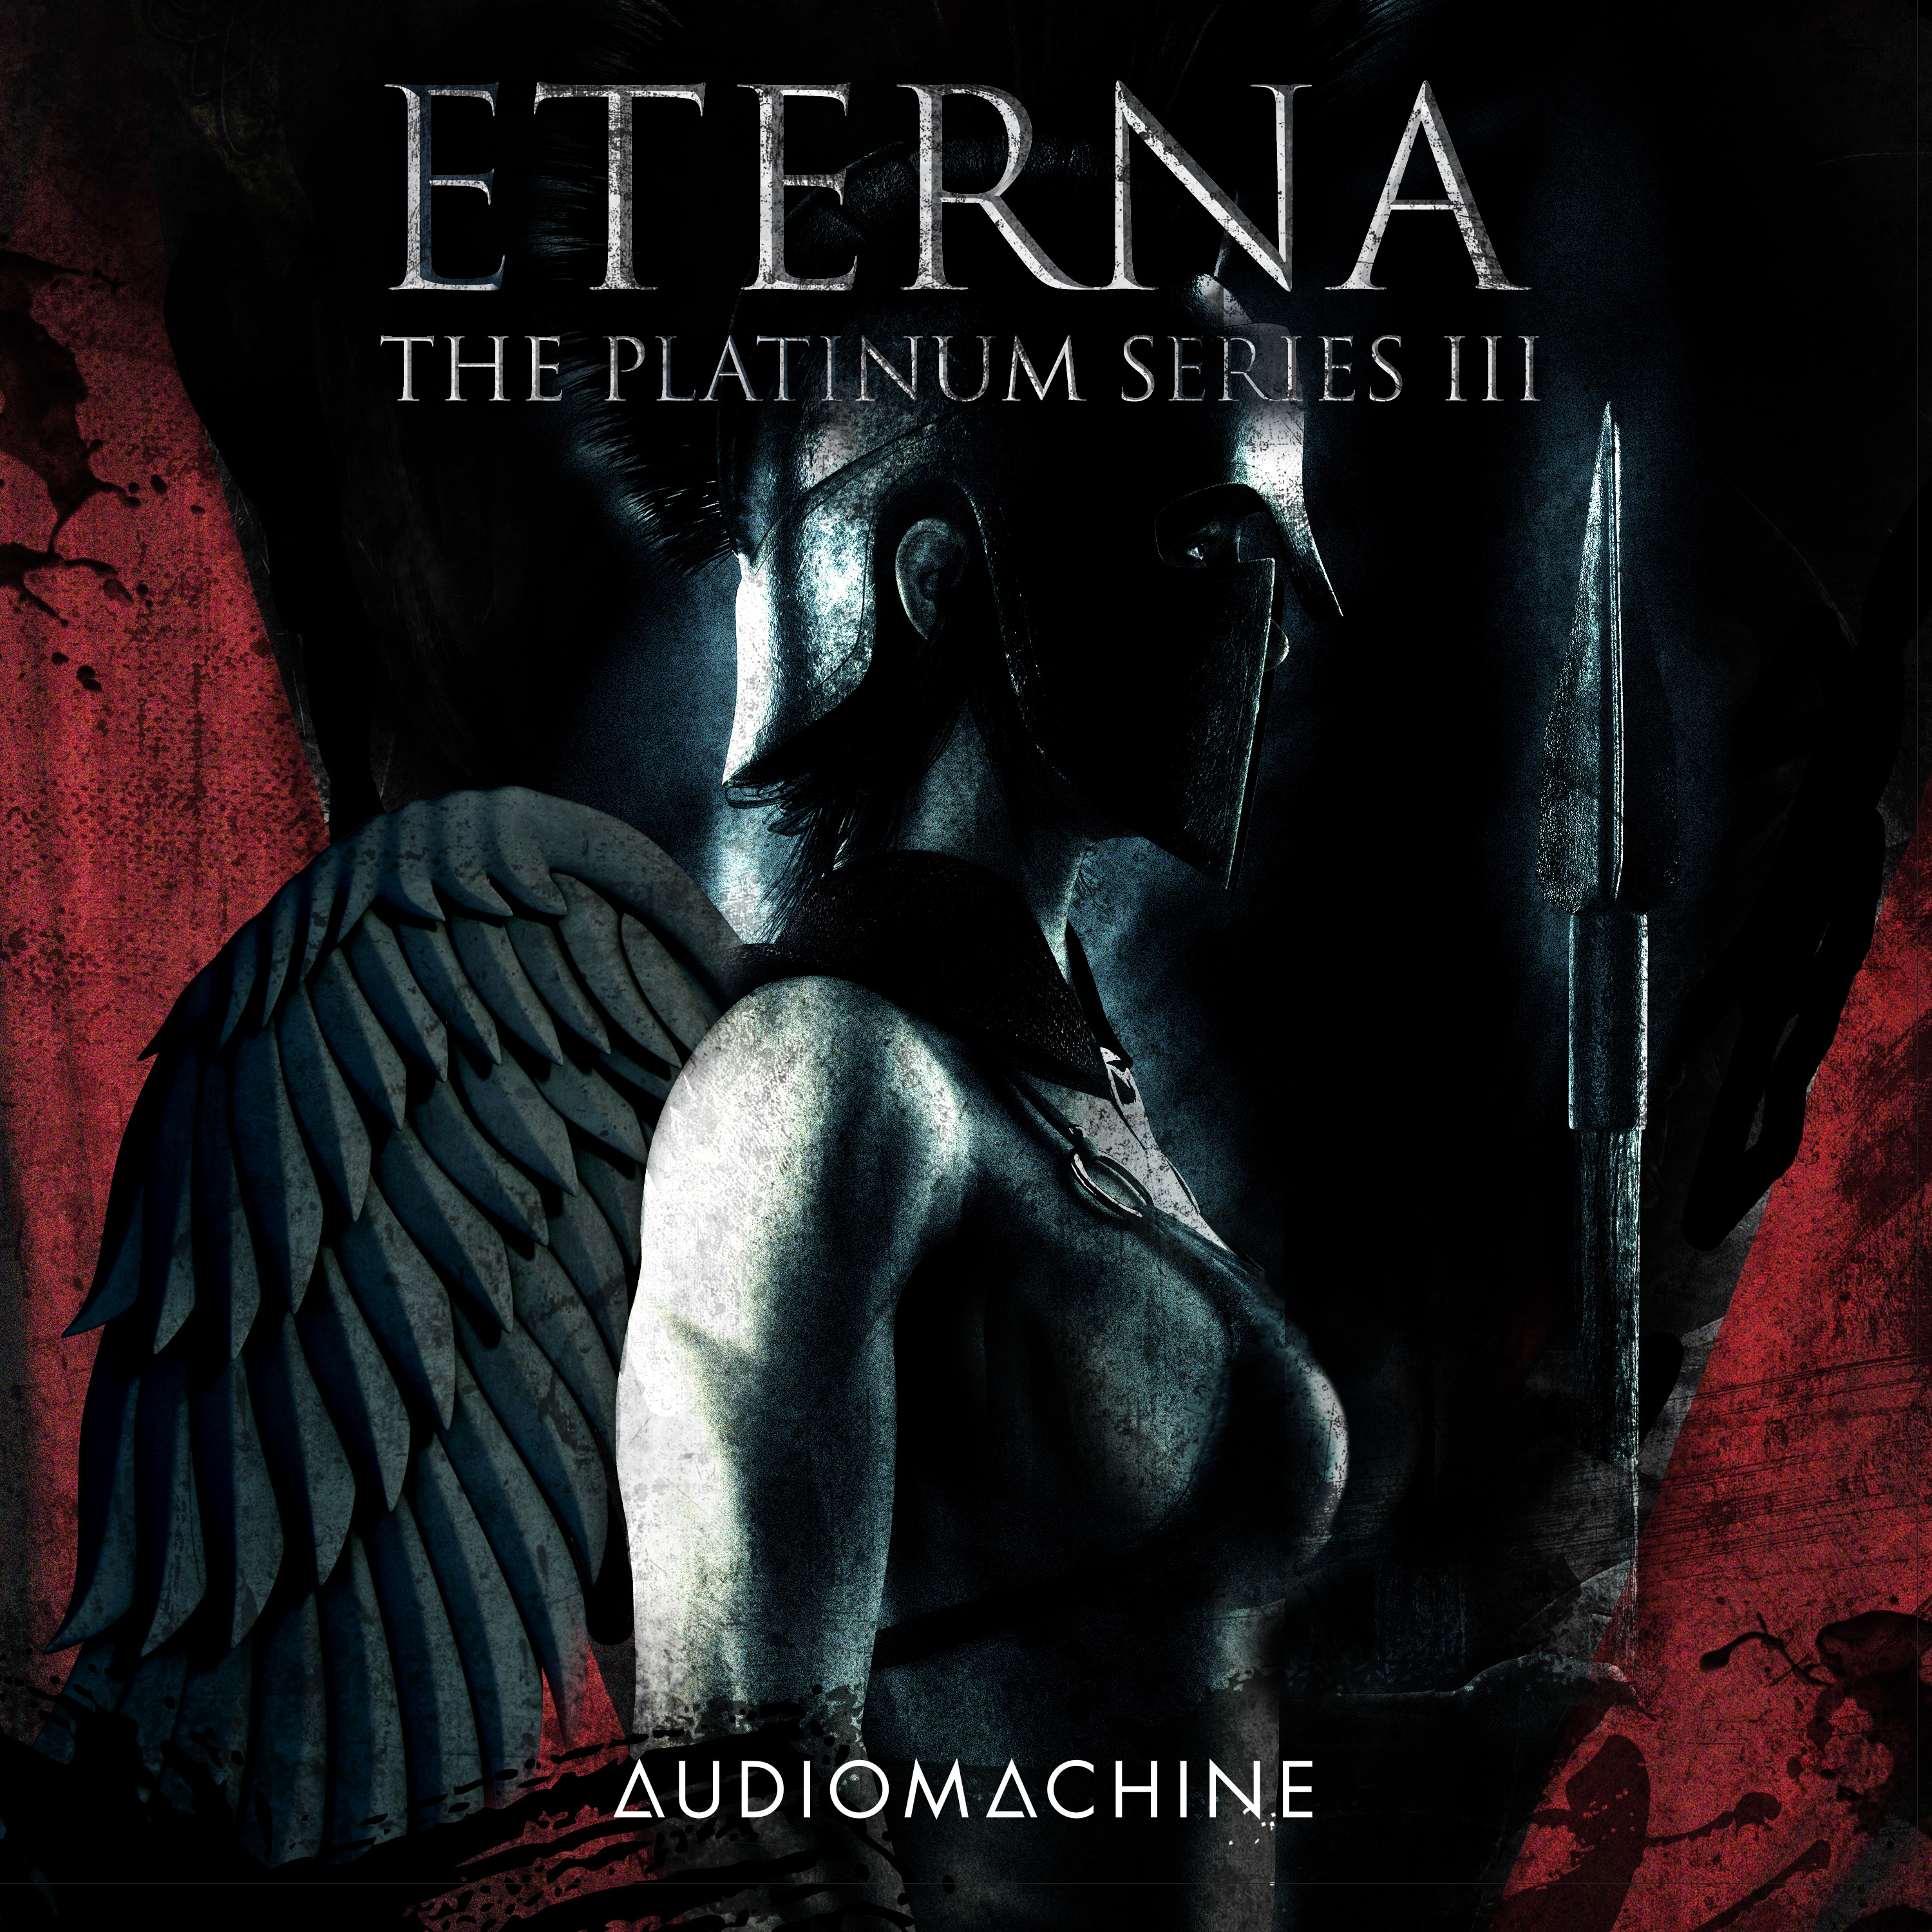 The Platinum Series III: Eterna